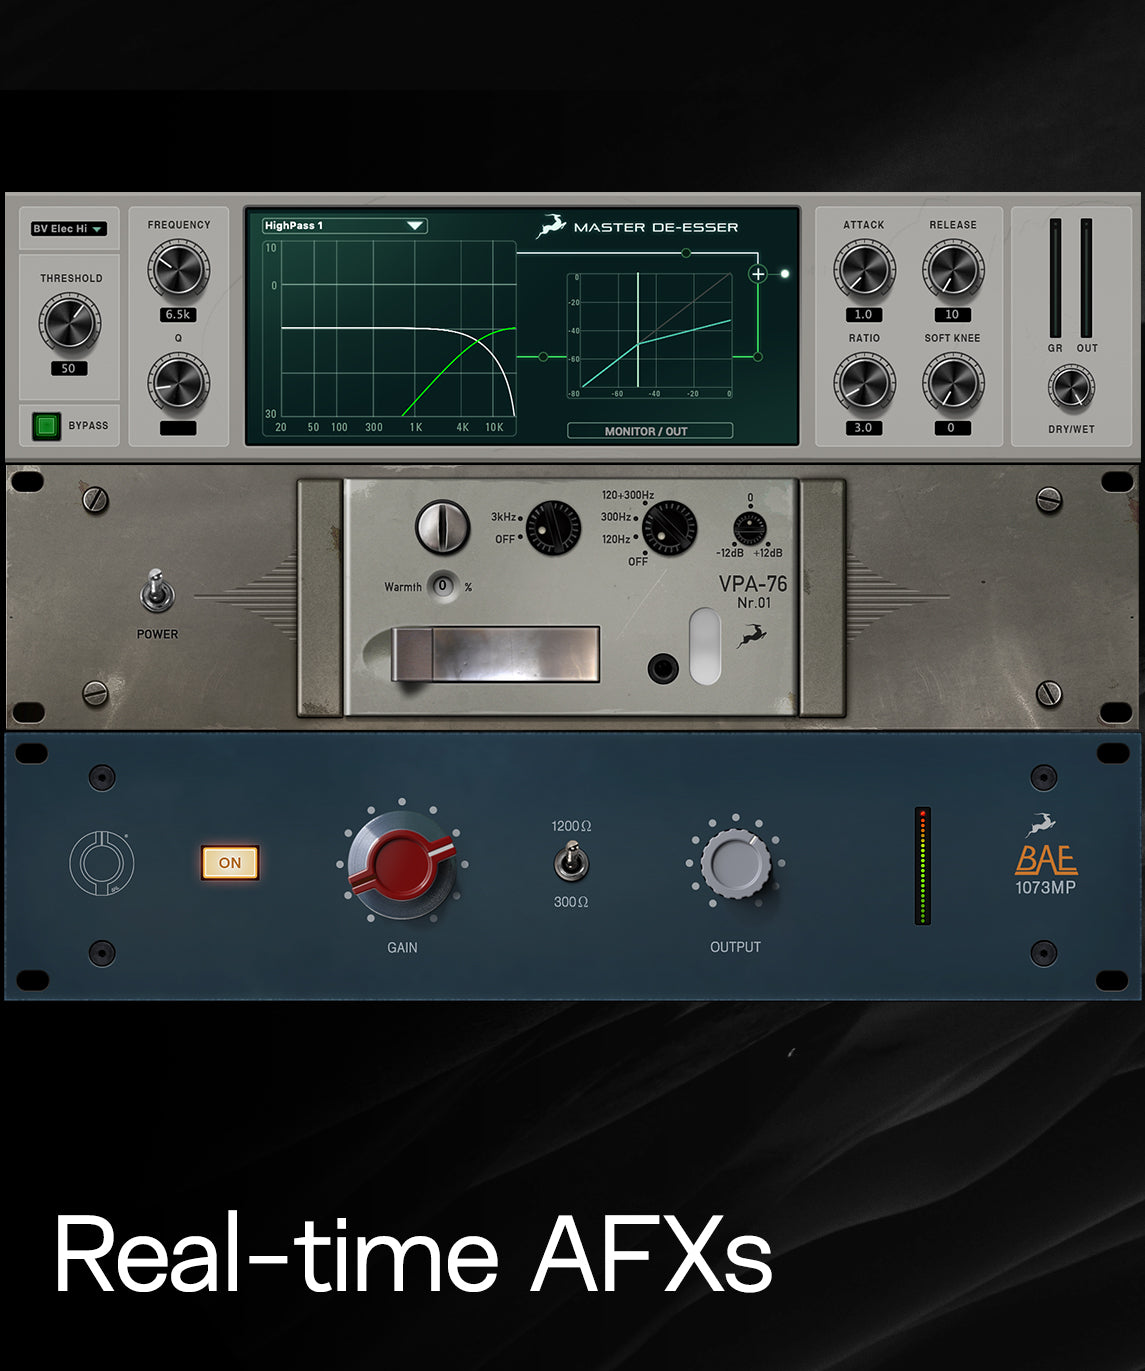 Antelope Audio Discrete 8 Pro Synergy Core